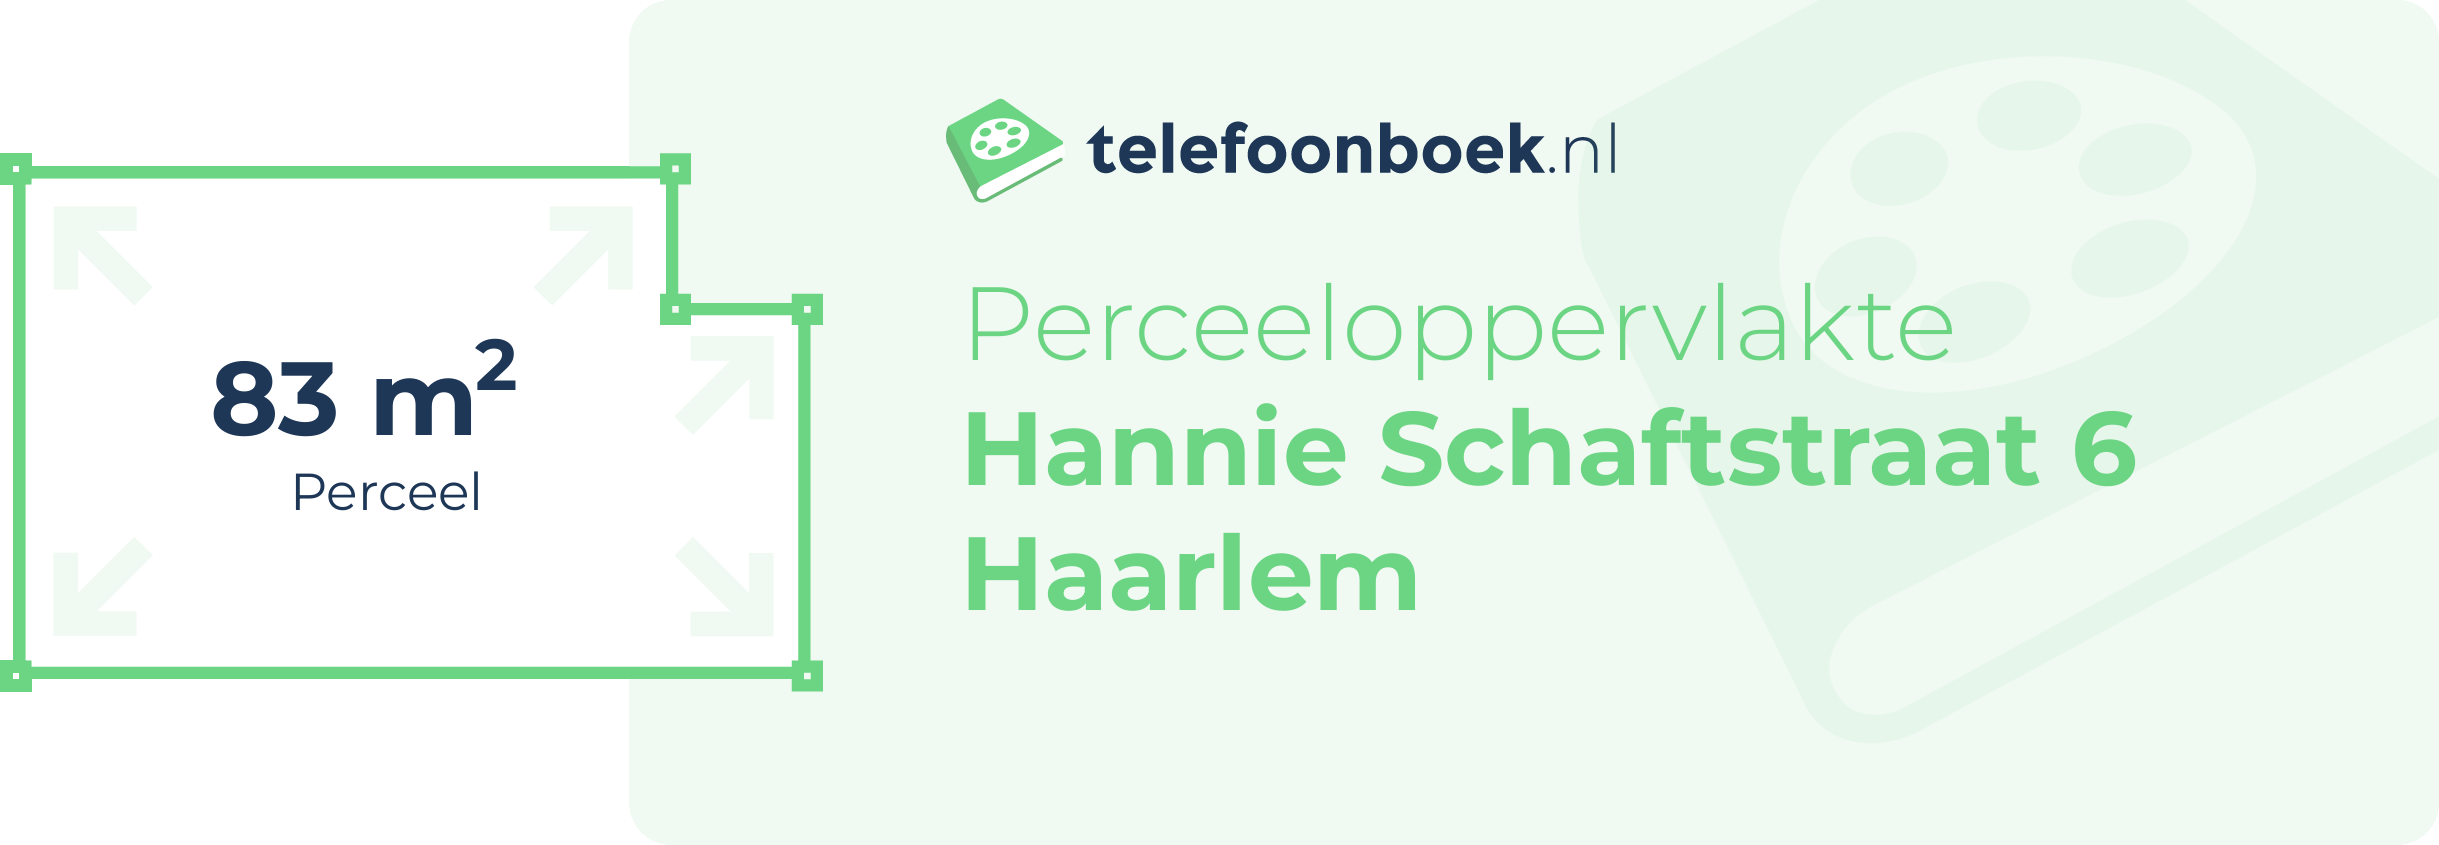 Perceeloppervlakte Hannie Schaftstraat 6 Haarlem